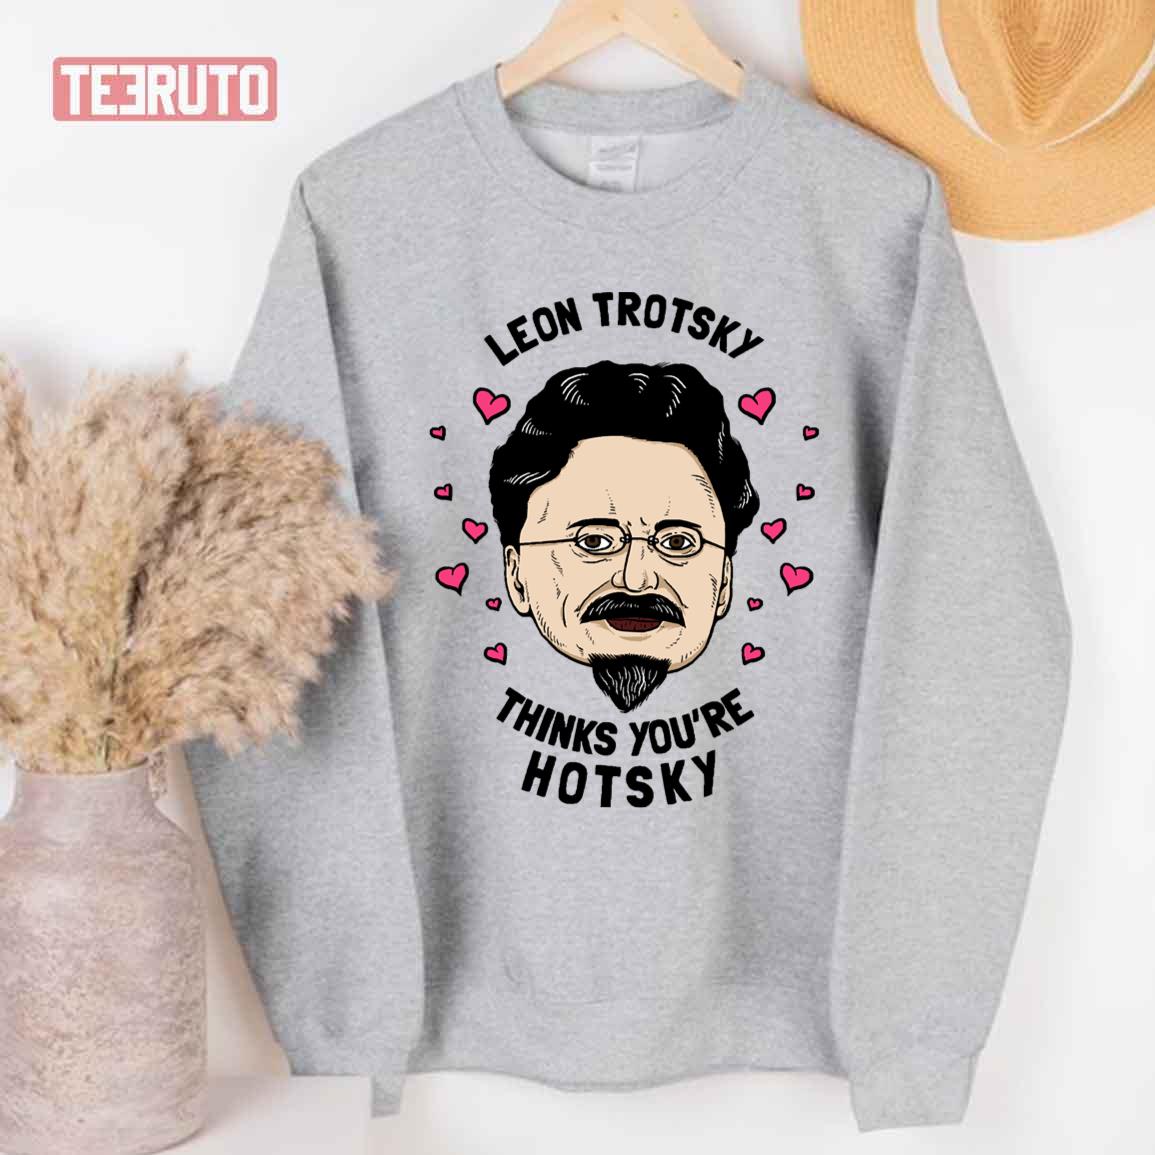 Leon Trotsky Thinks You’re Hotsky Unisex T-Shirt